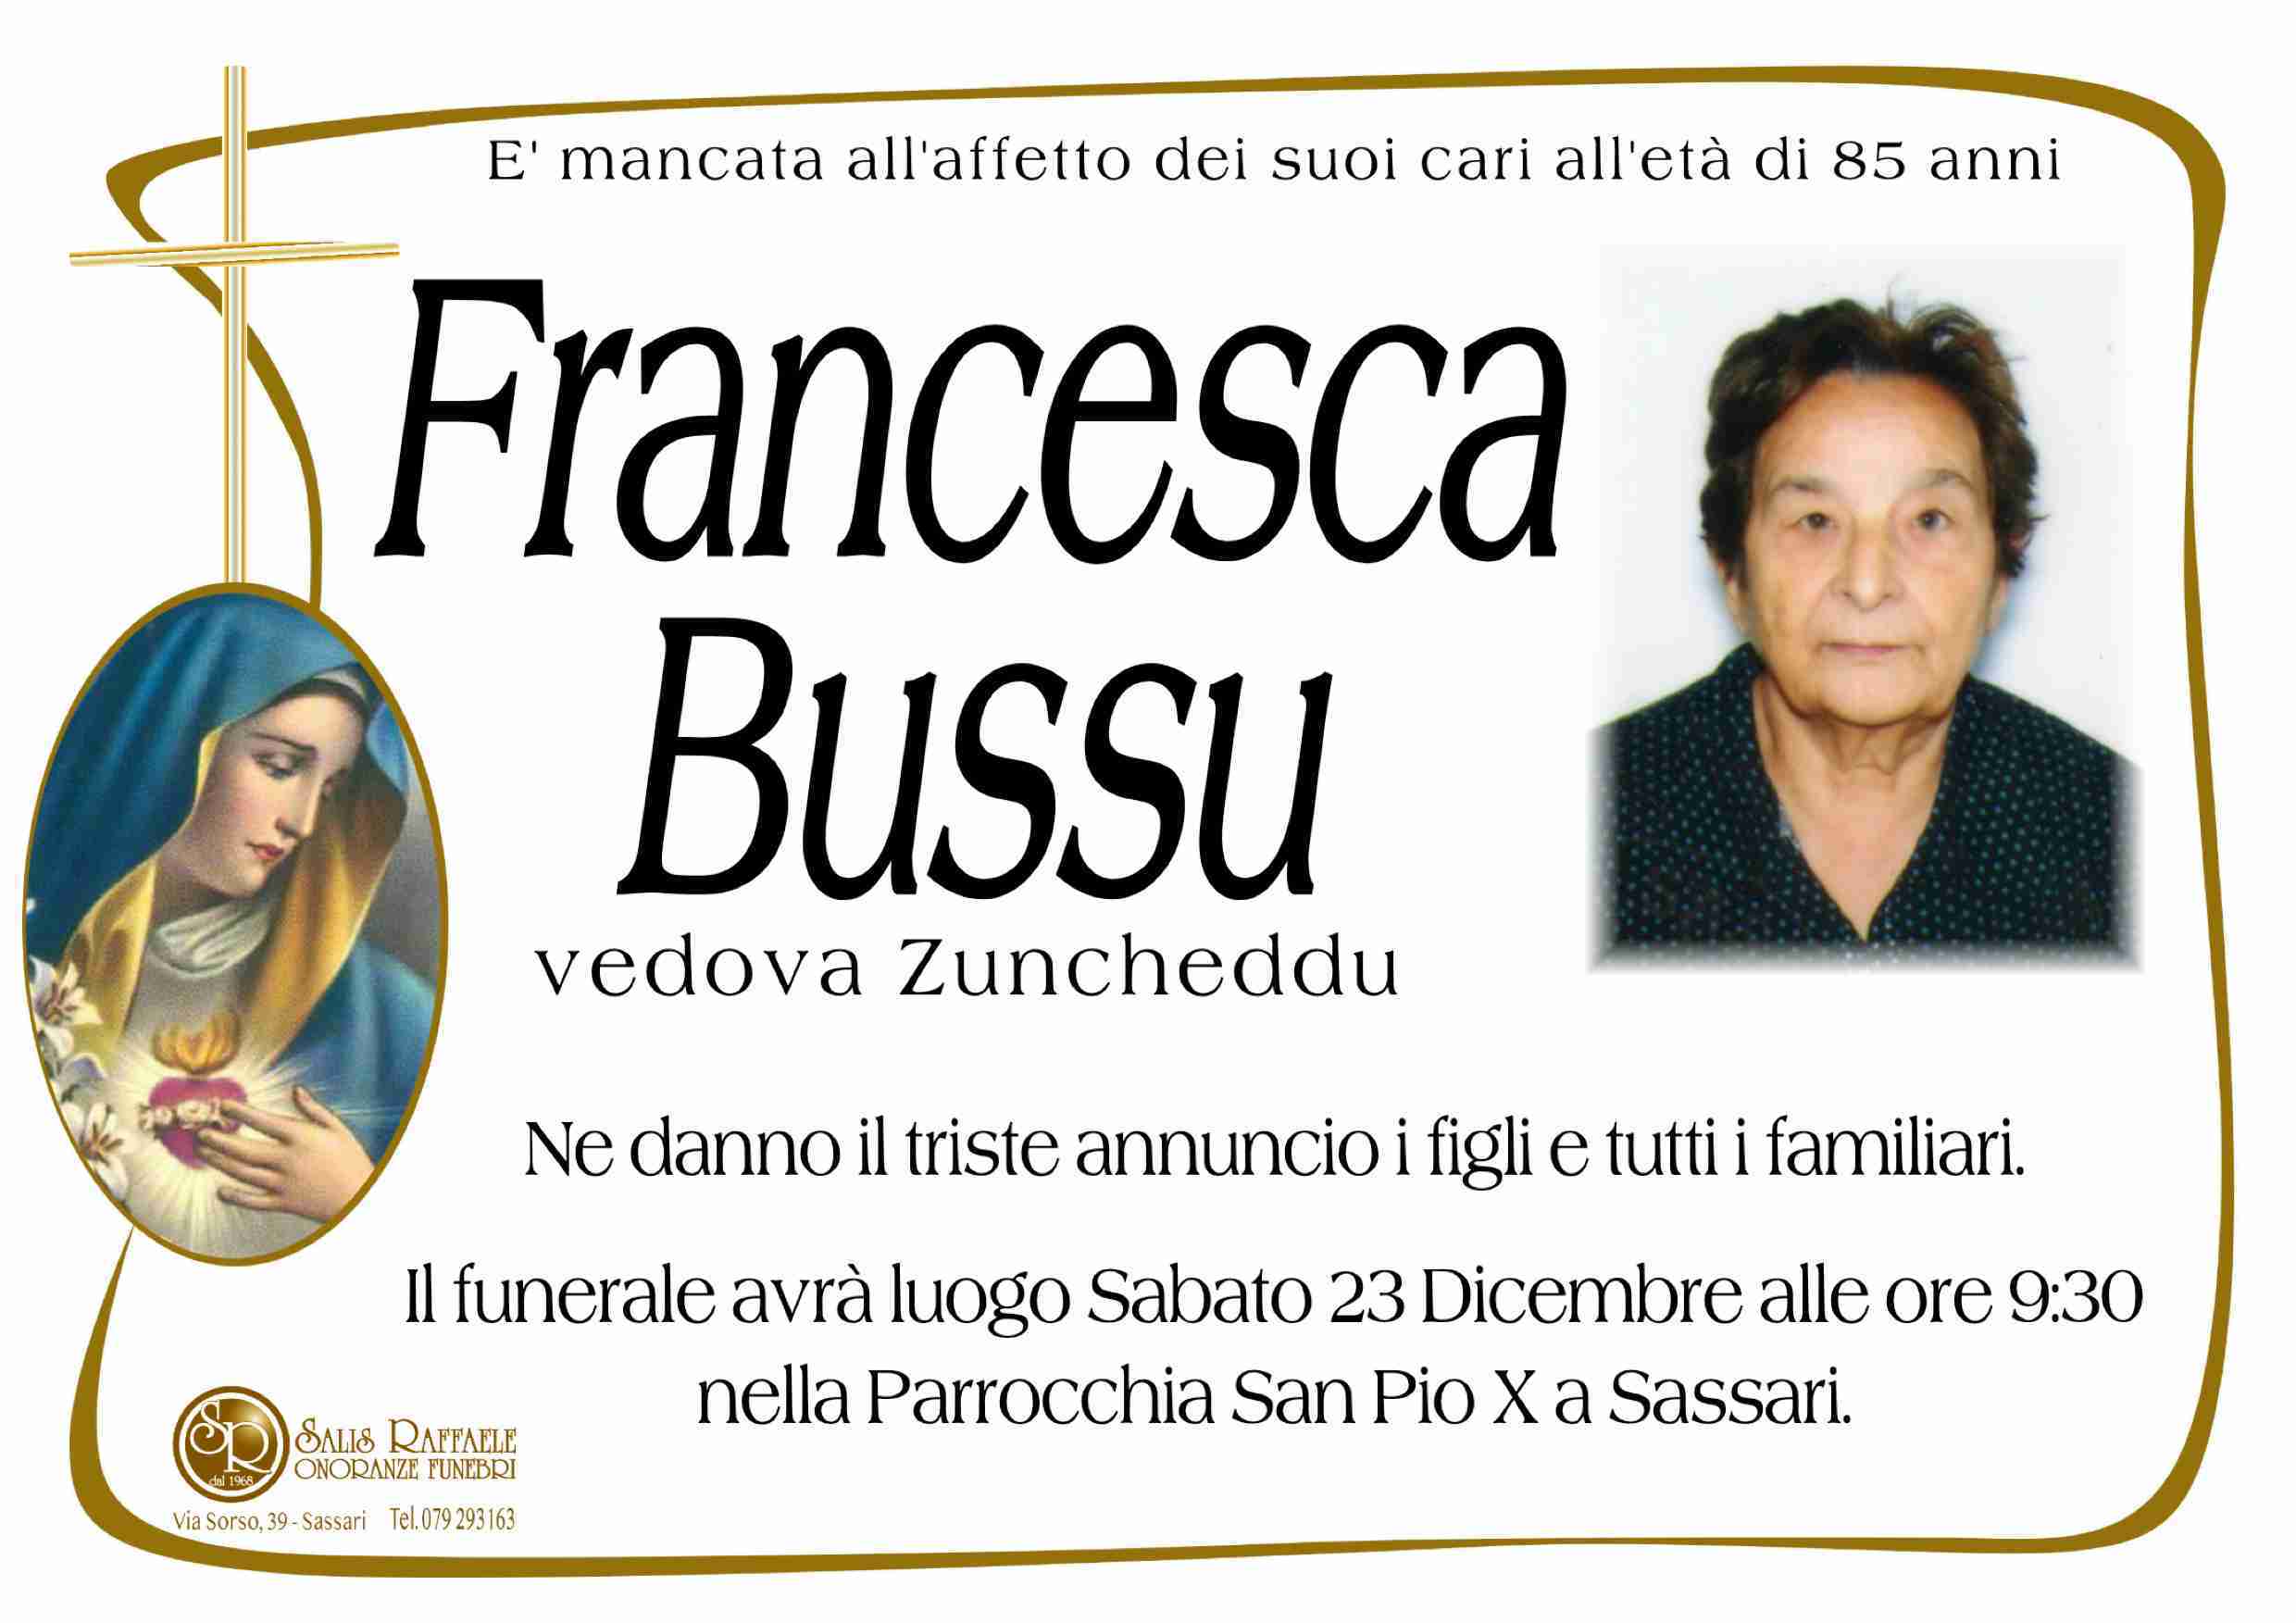 Francesca Bussu